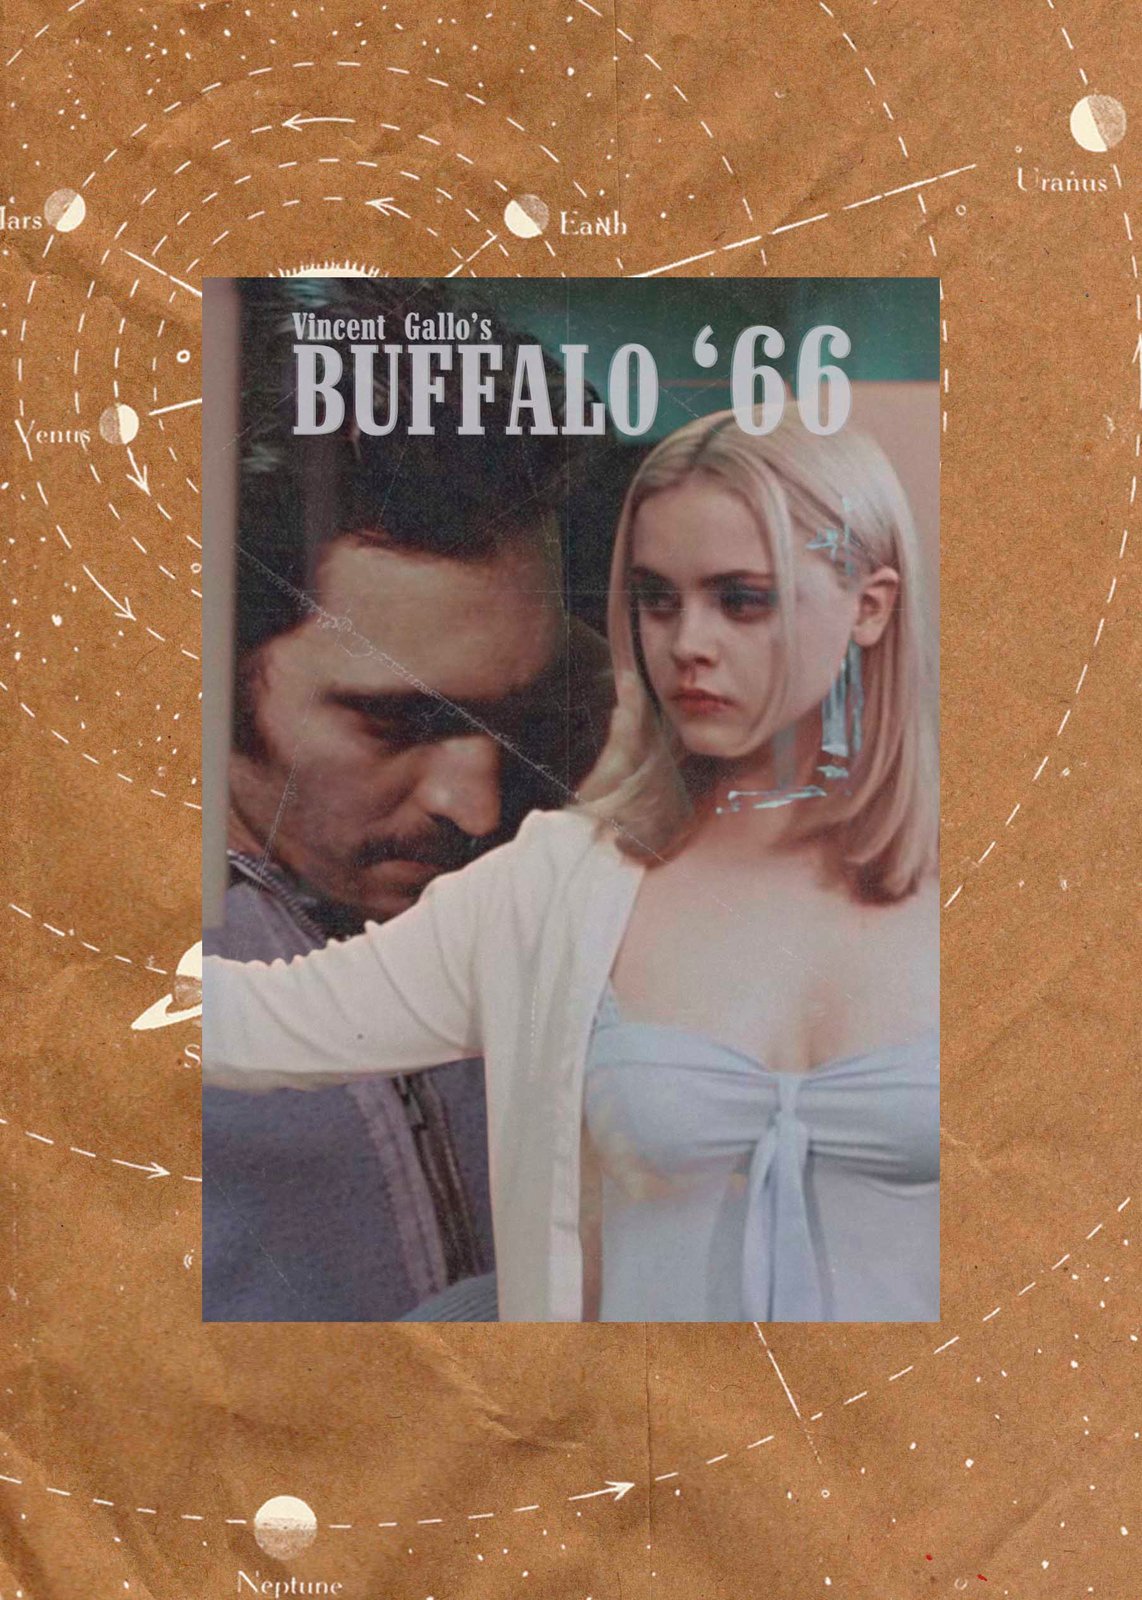 BUFFALO '66 | laura shasta